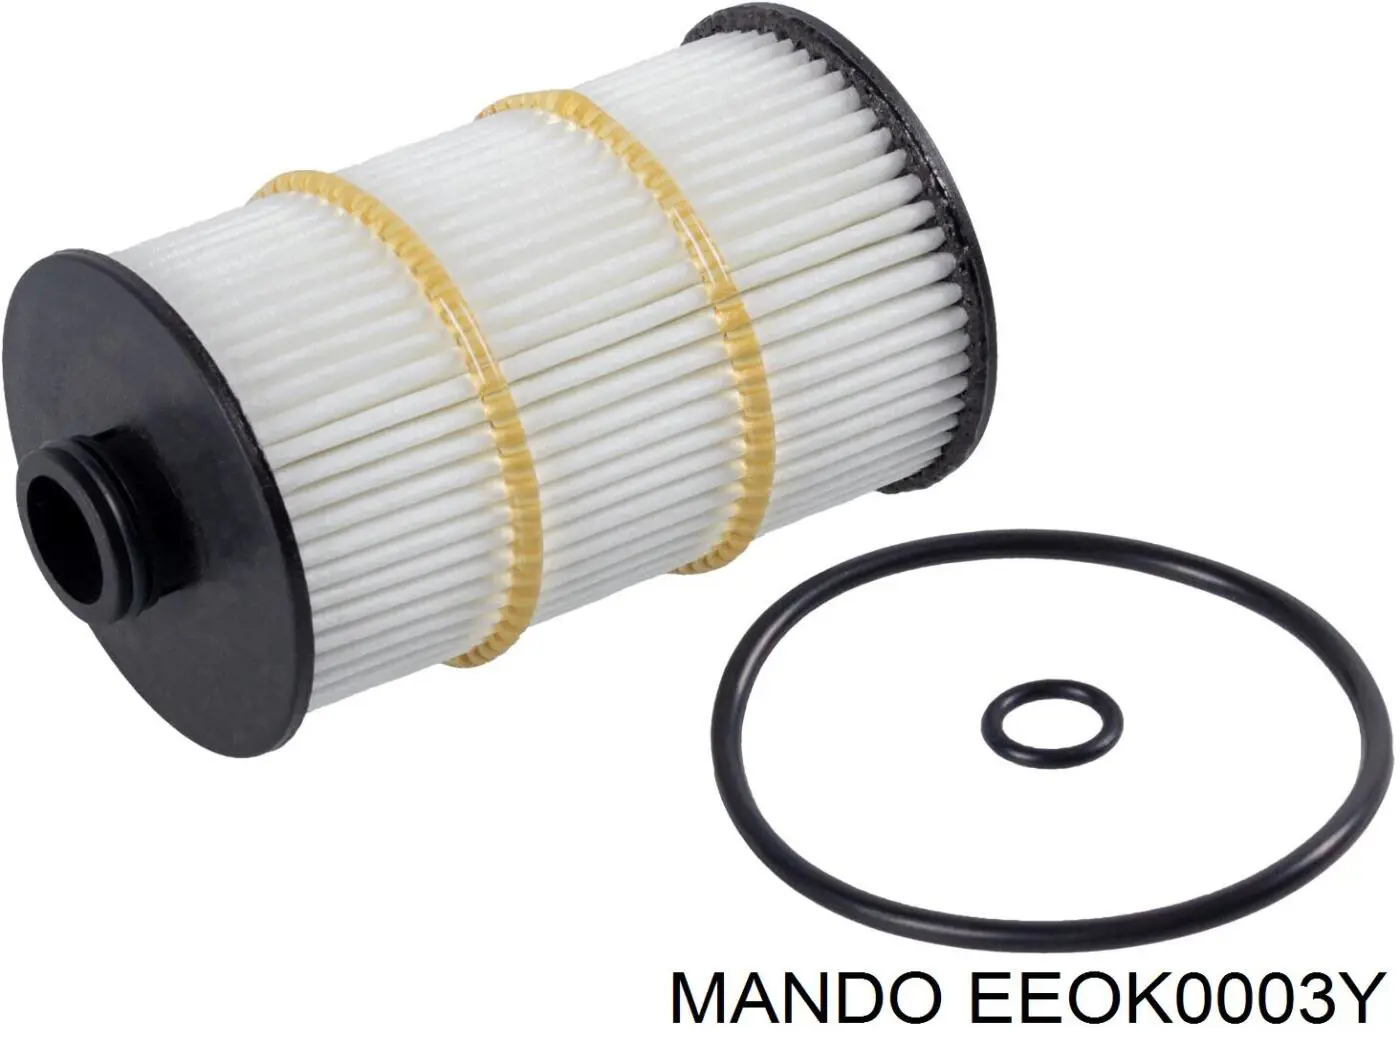 EEOK0003Y Mando масляный фильтр